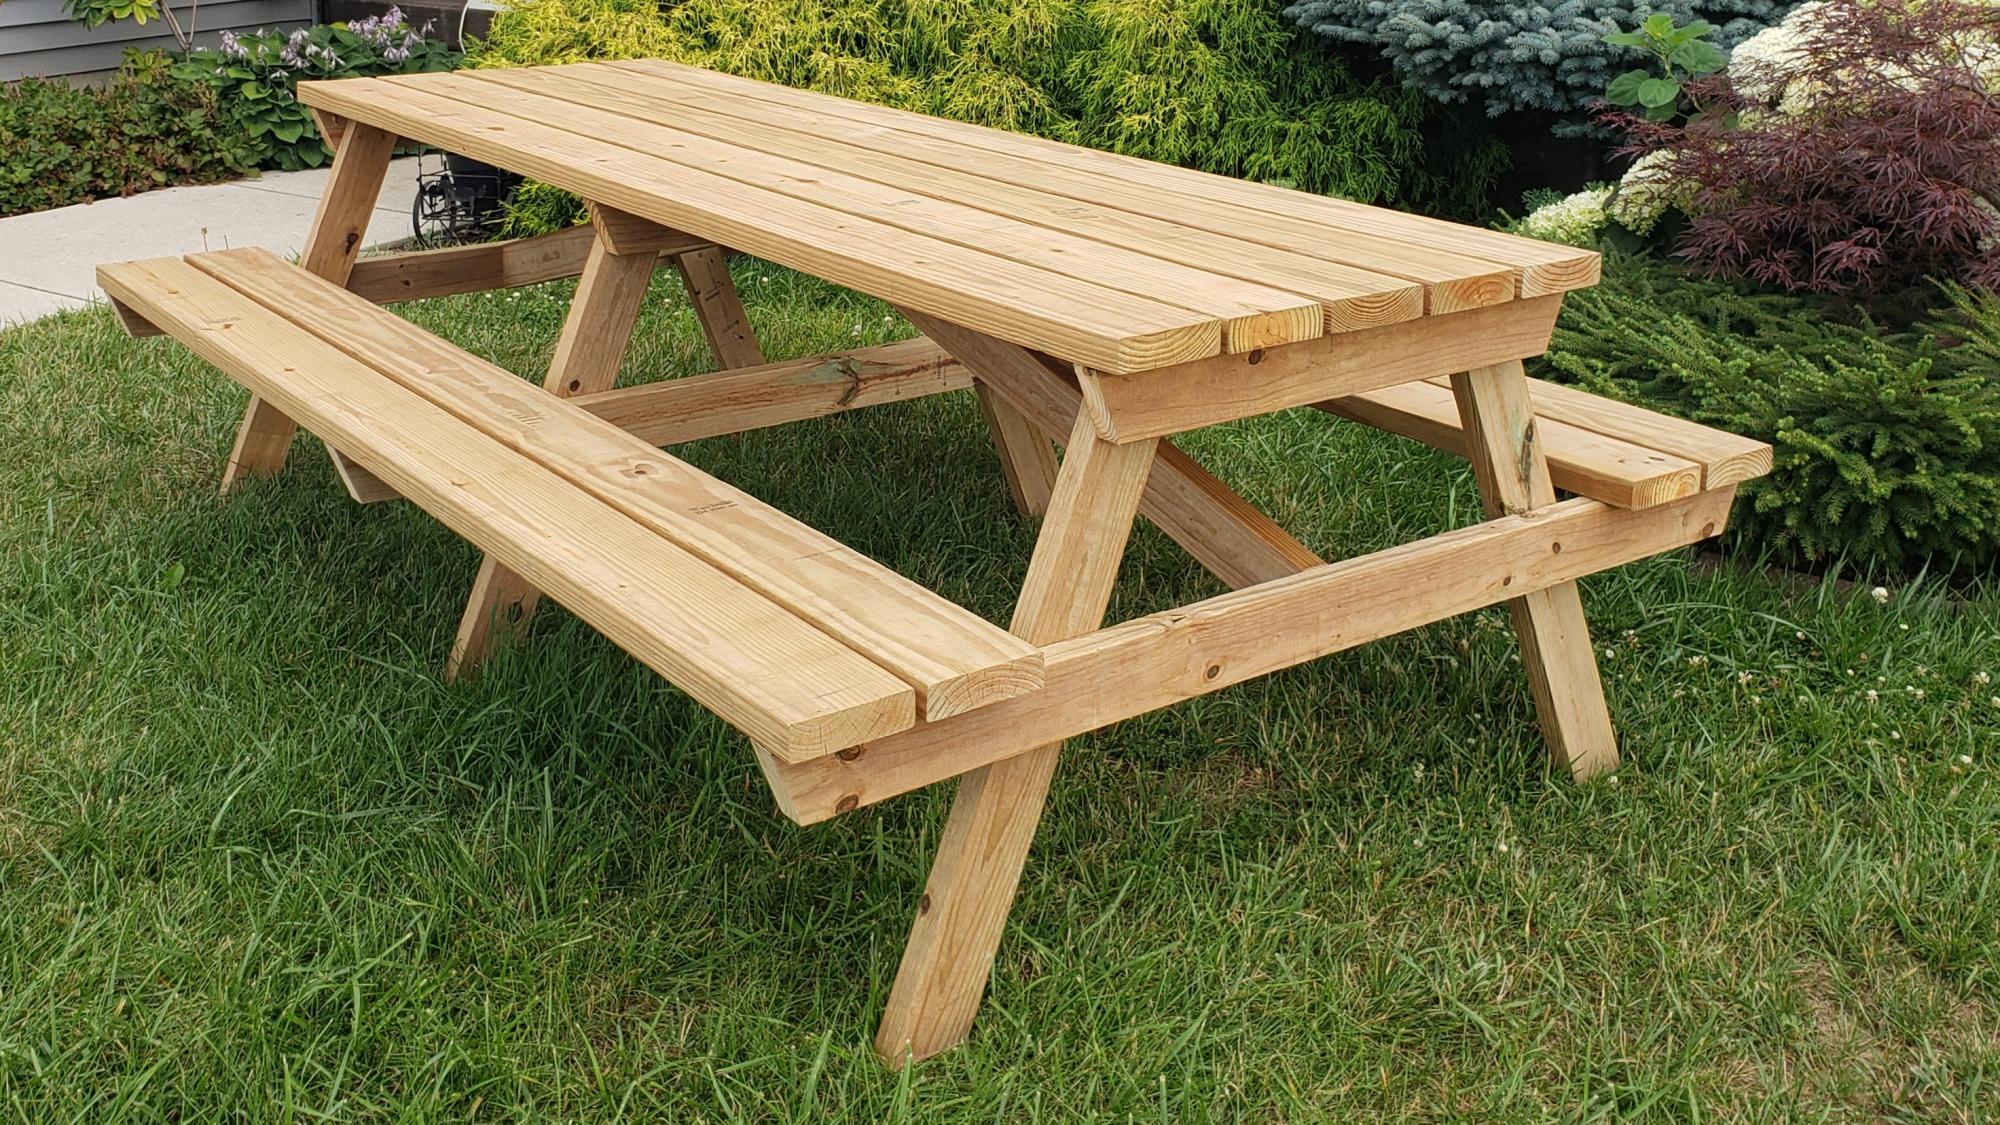 Non wooden picnic table